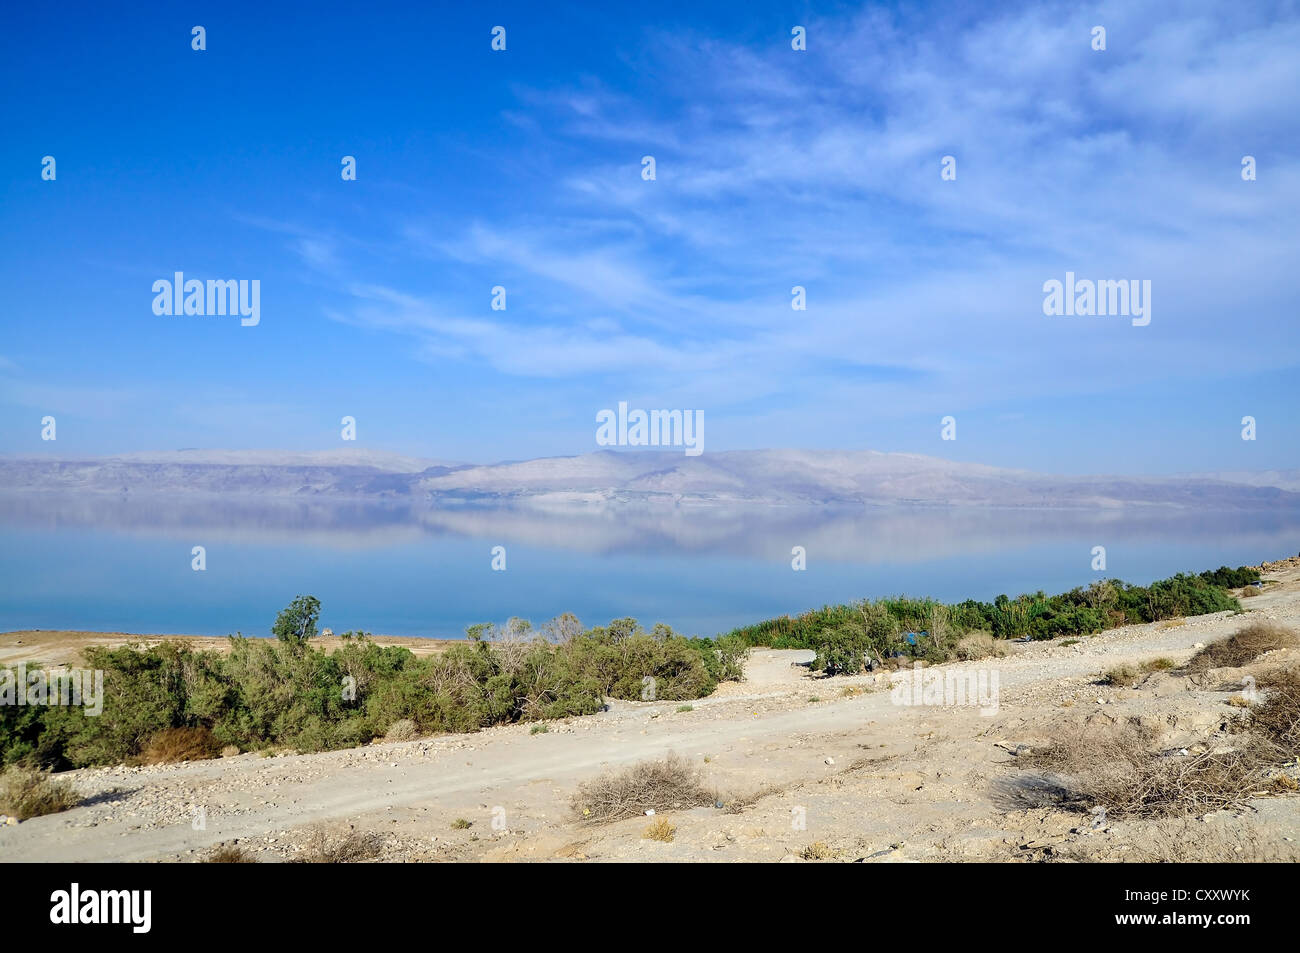 Landscape. Beautiful reflection in the Dead Sea in Israel. Stock Photo